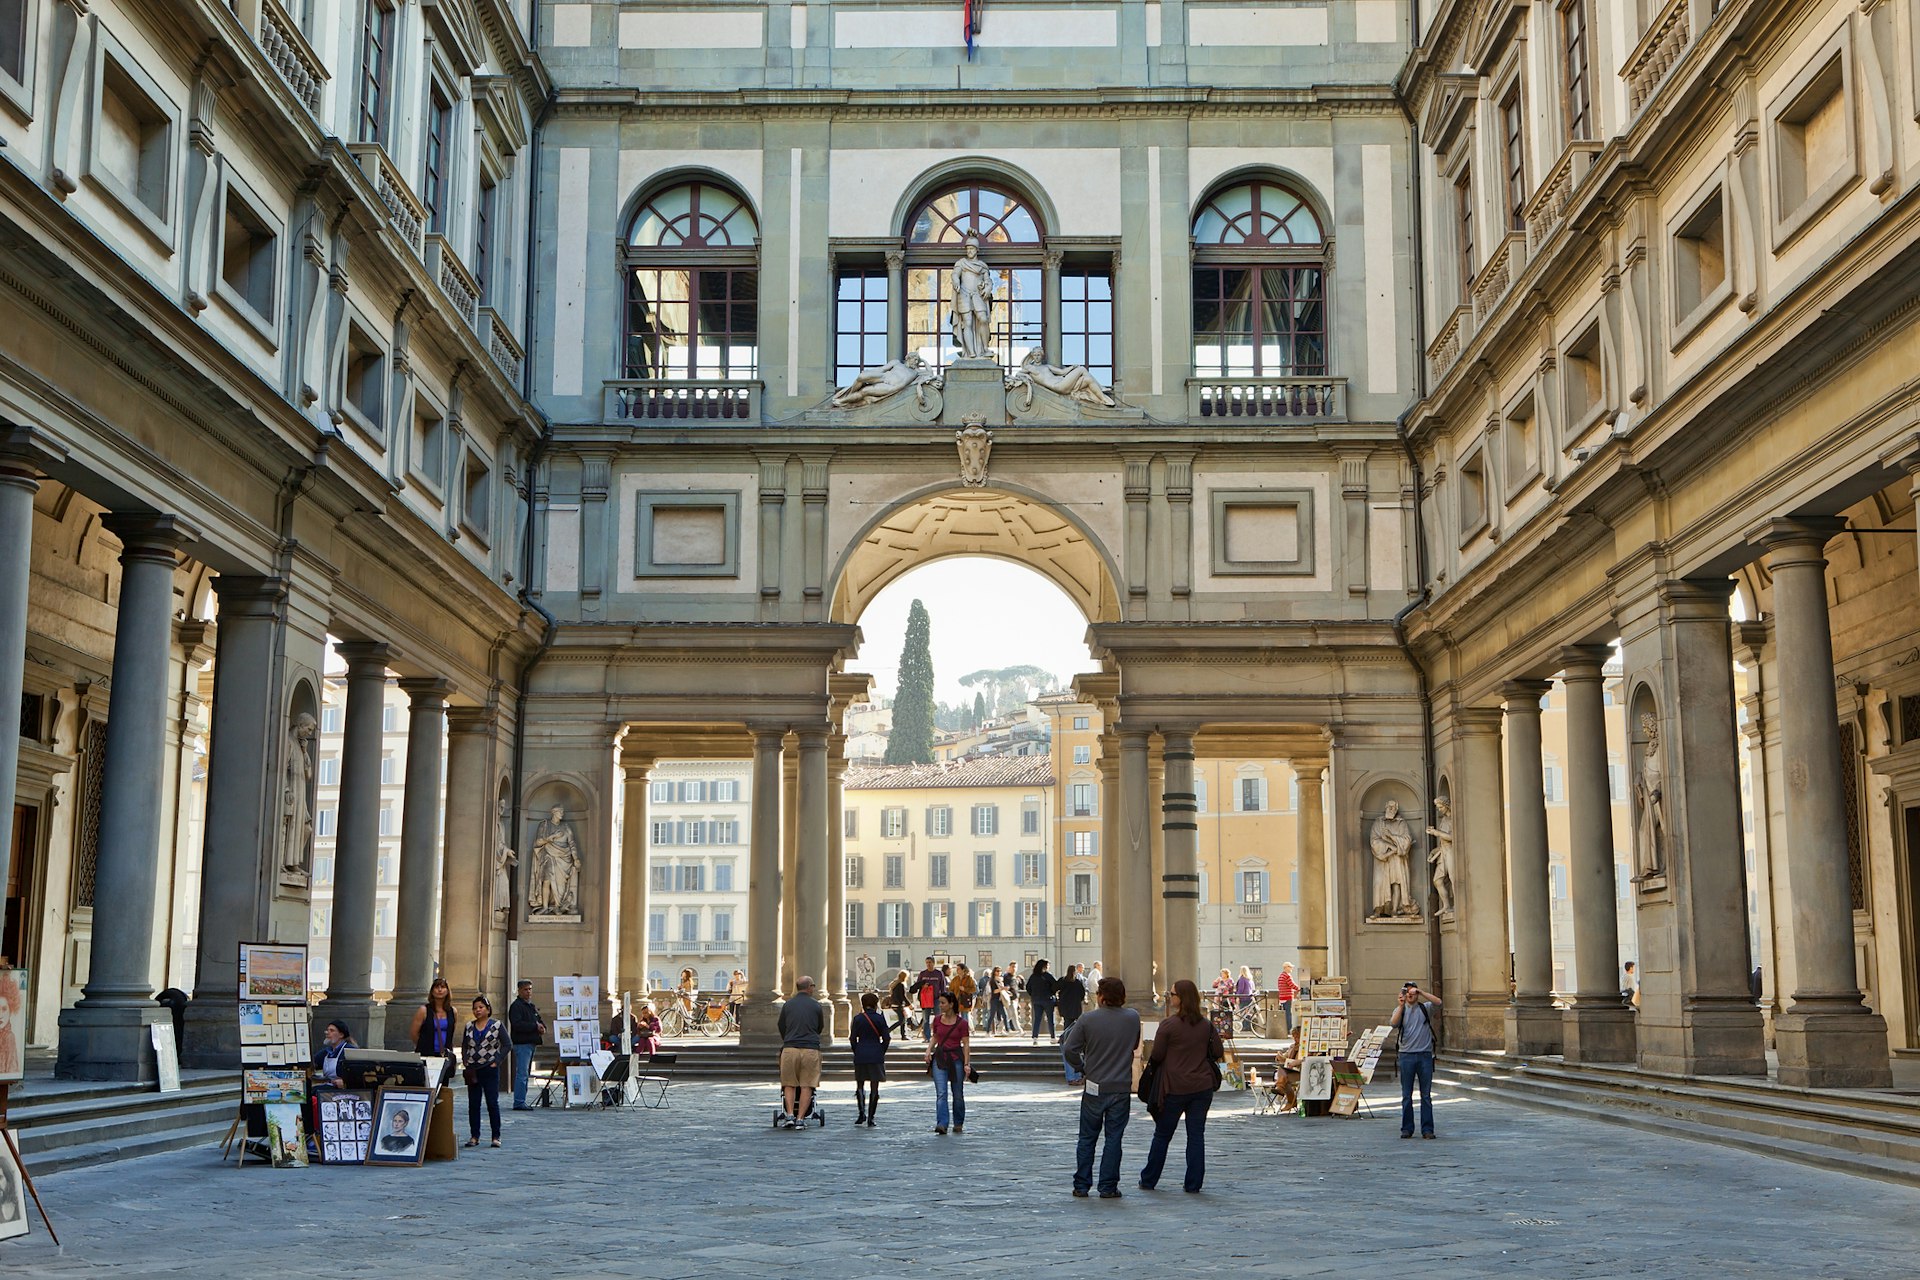 People in the Vasari Corridor at the Galleria degli Uffiz